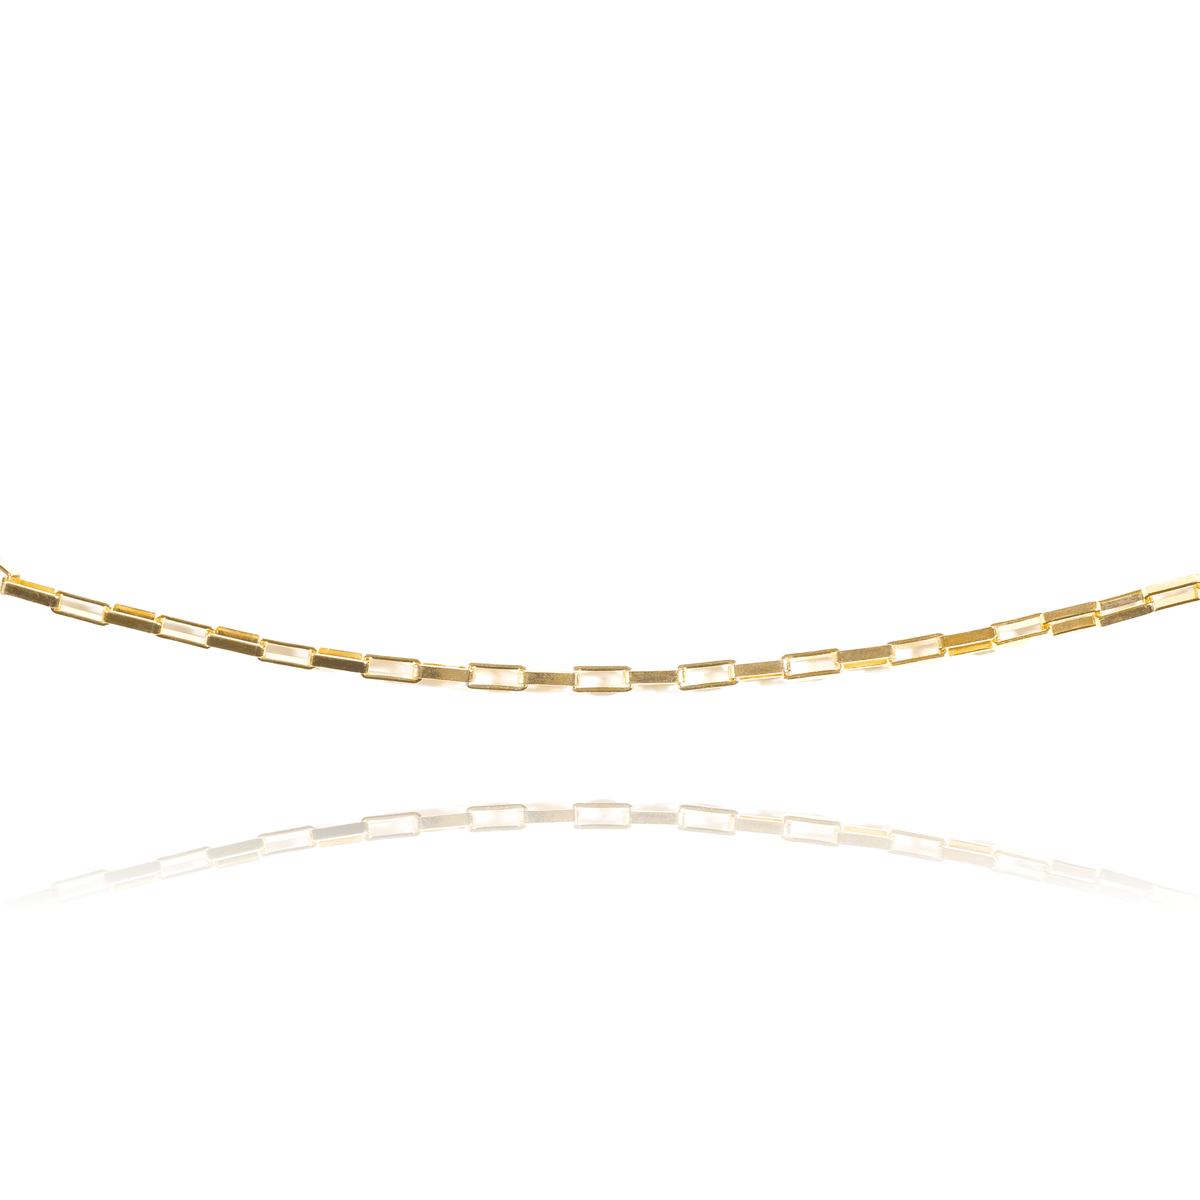 Align gold chain anklet on white background